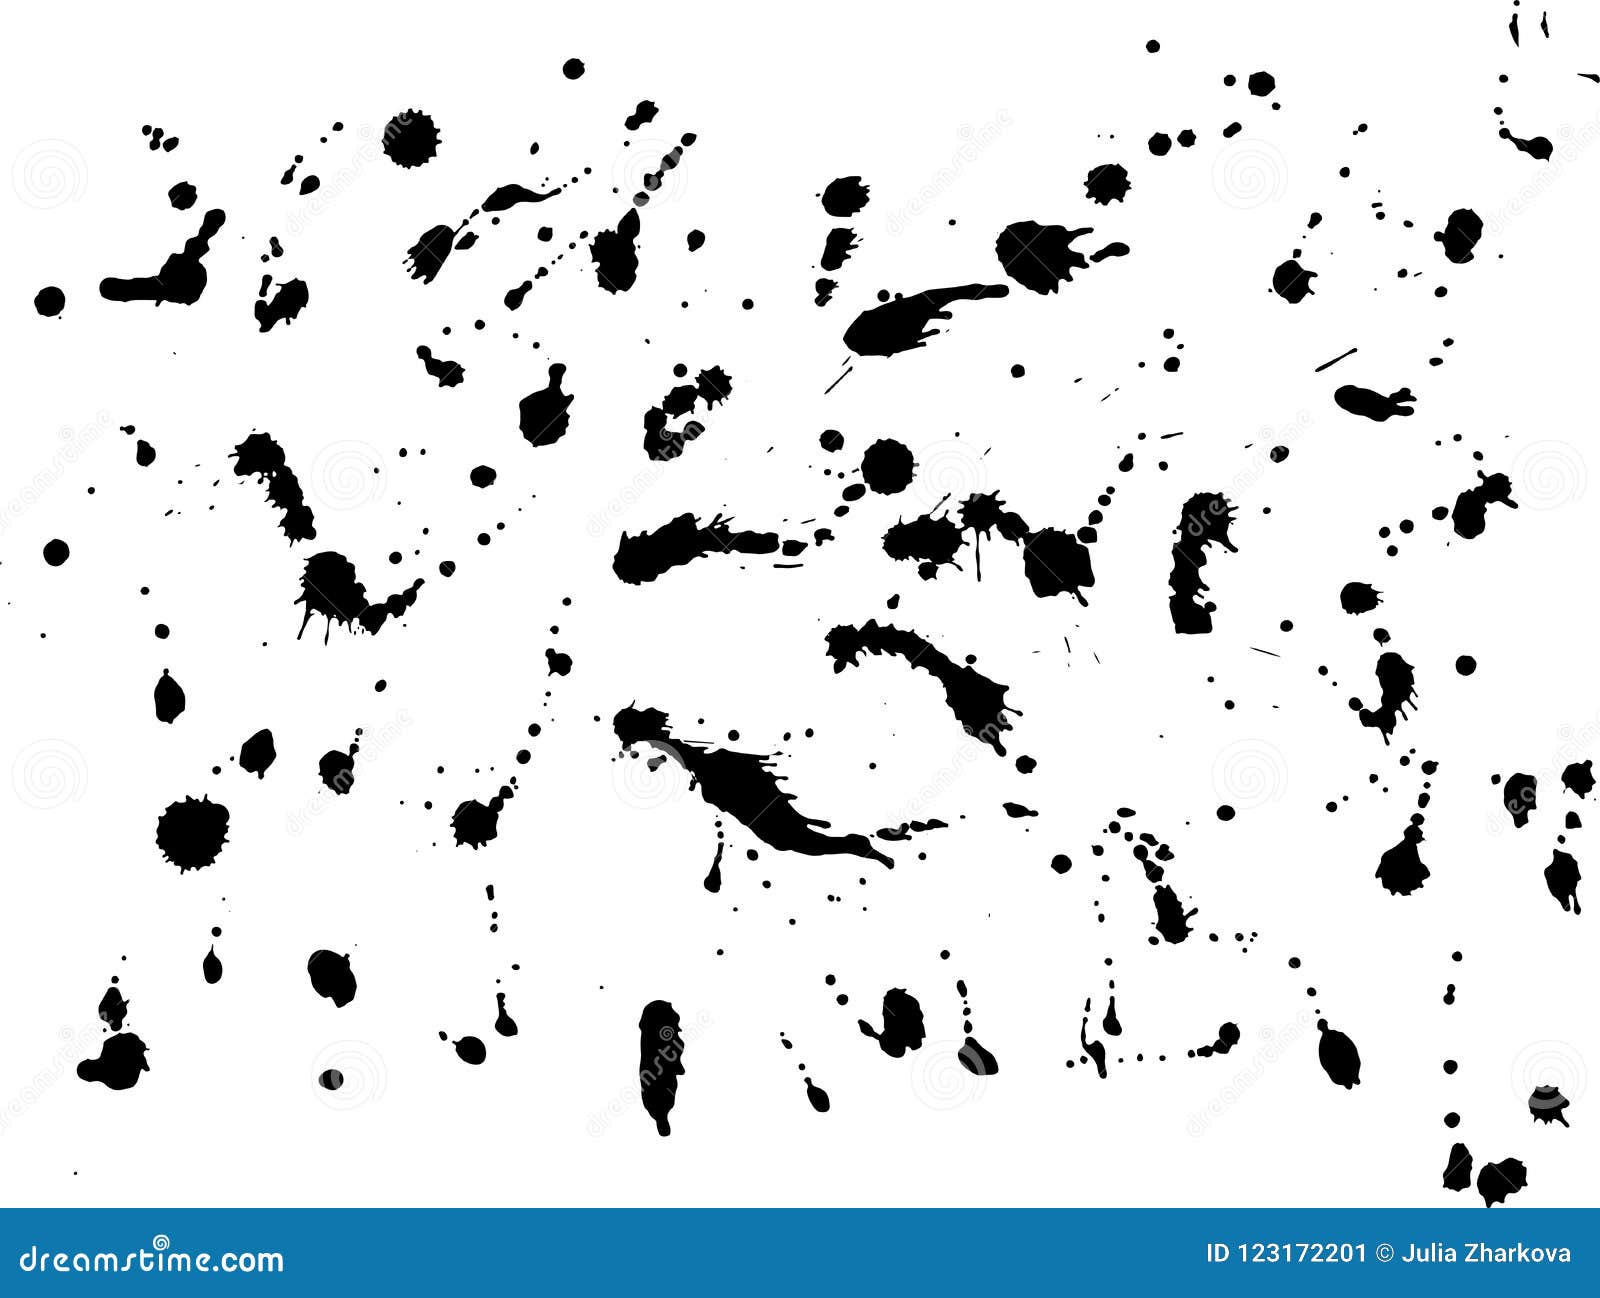 Messy Ink Blot, Black Drops on White Background. Vector Illustration ...